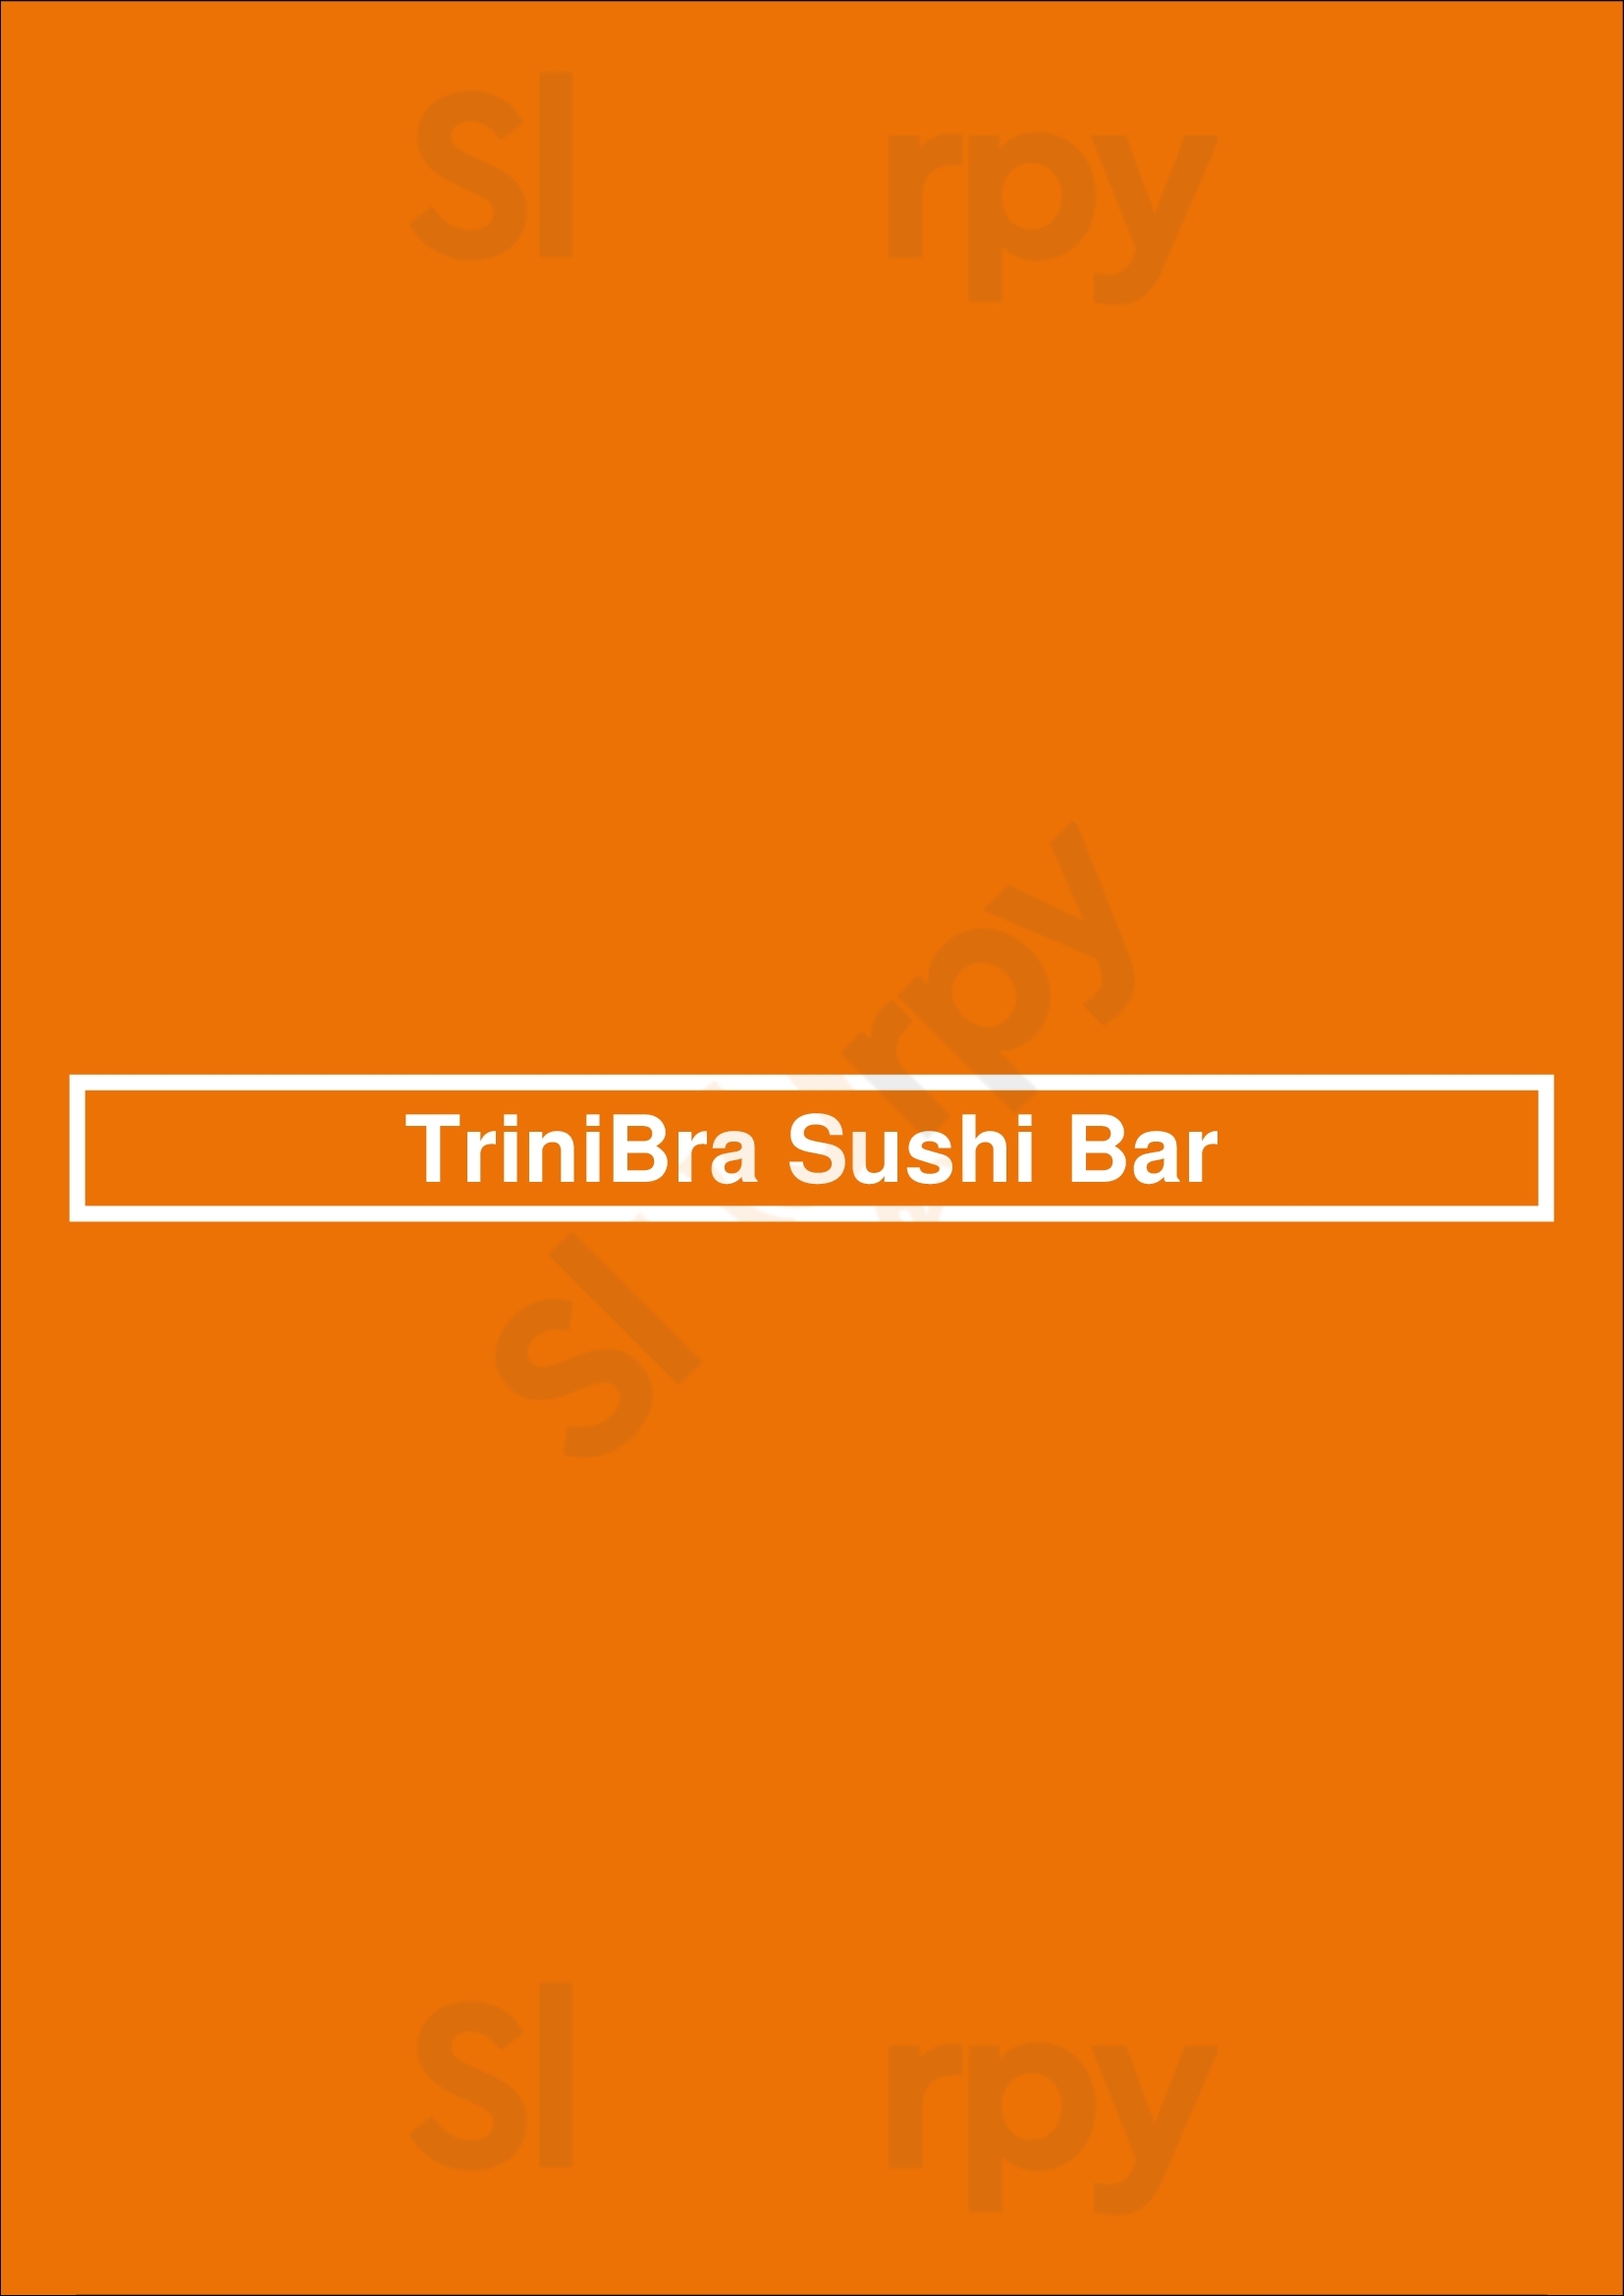 Trinibra Sushi Bar Deventer Menu - 1